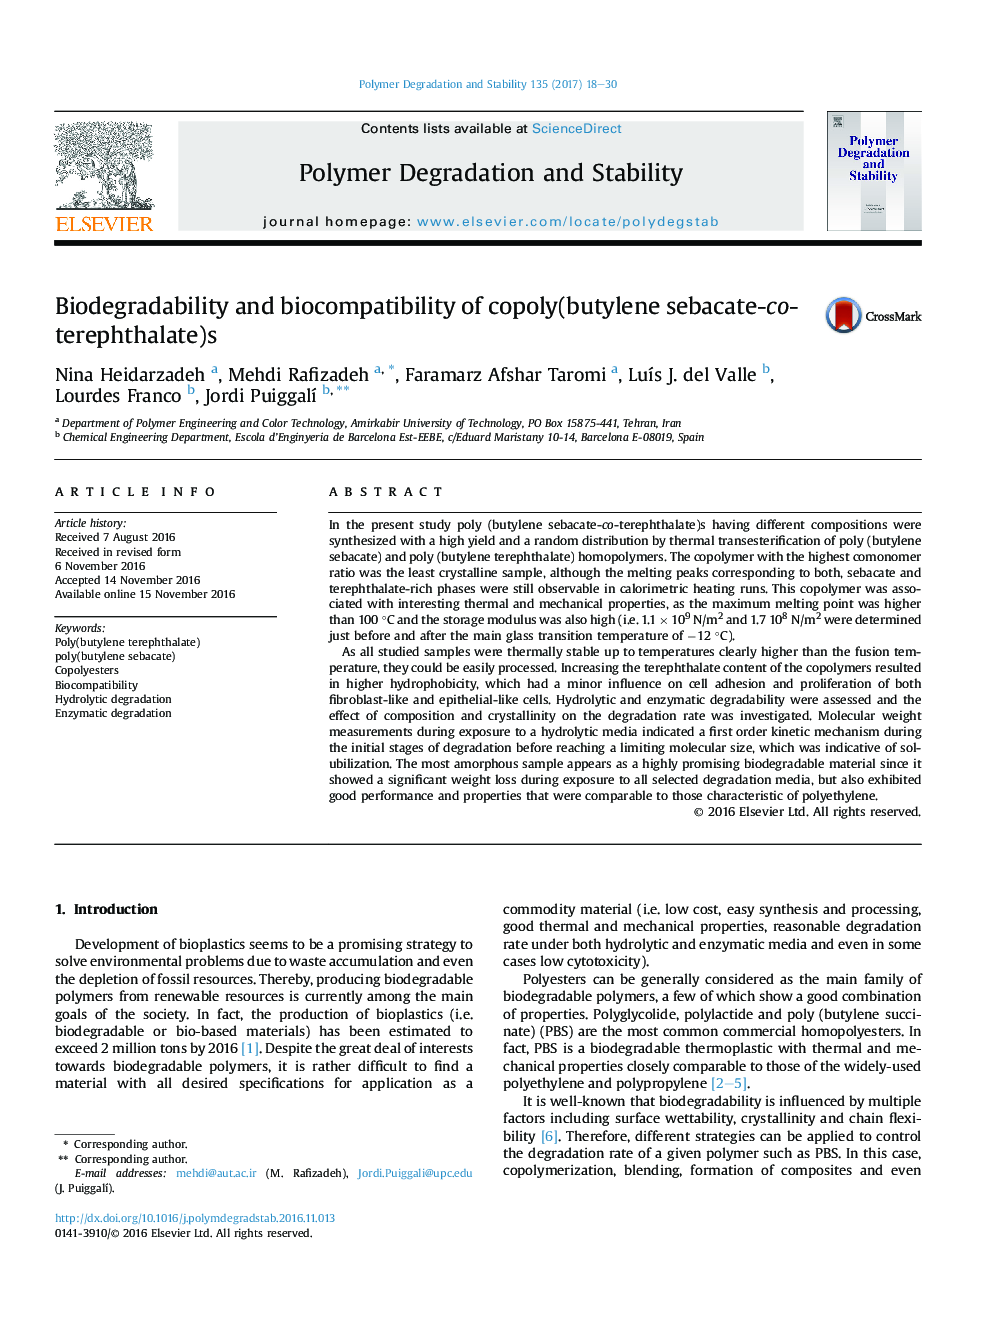 Biodegradability and biocompatibility of copoly(butylene sebacate-co-terephthalate)s